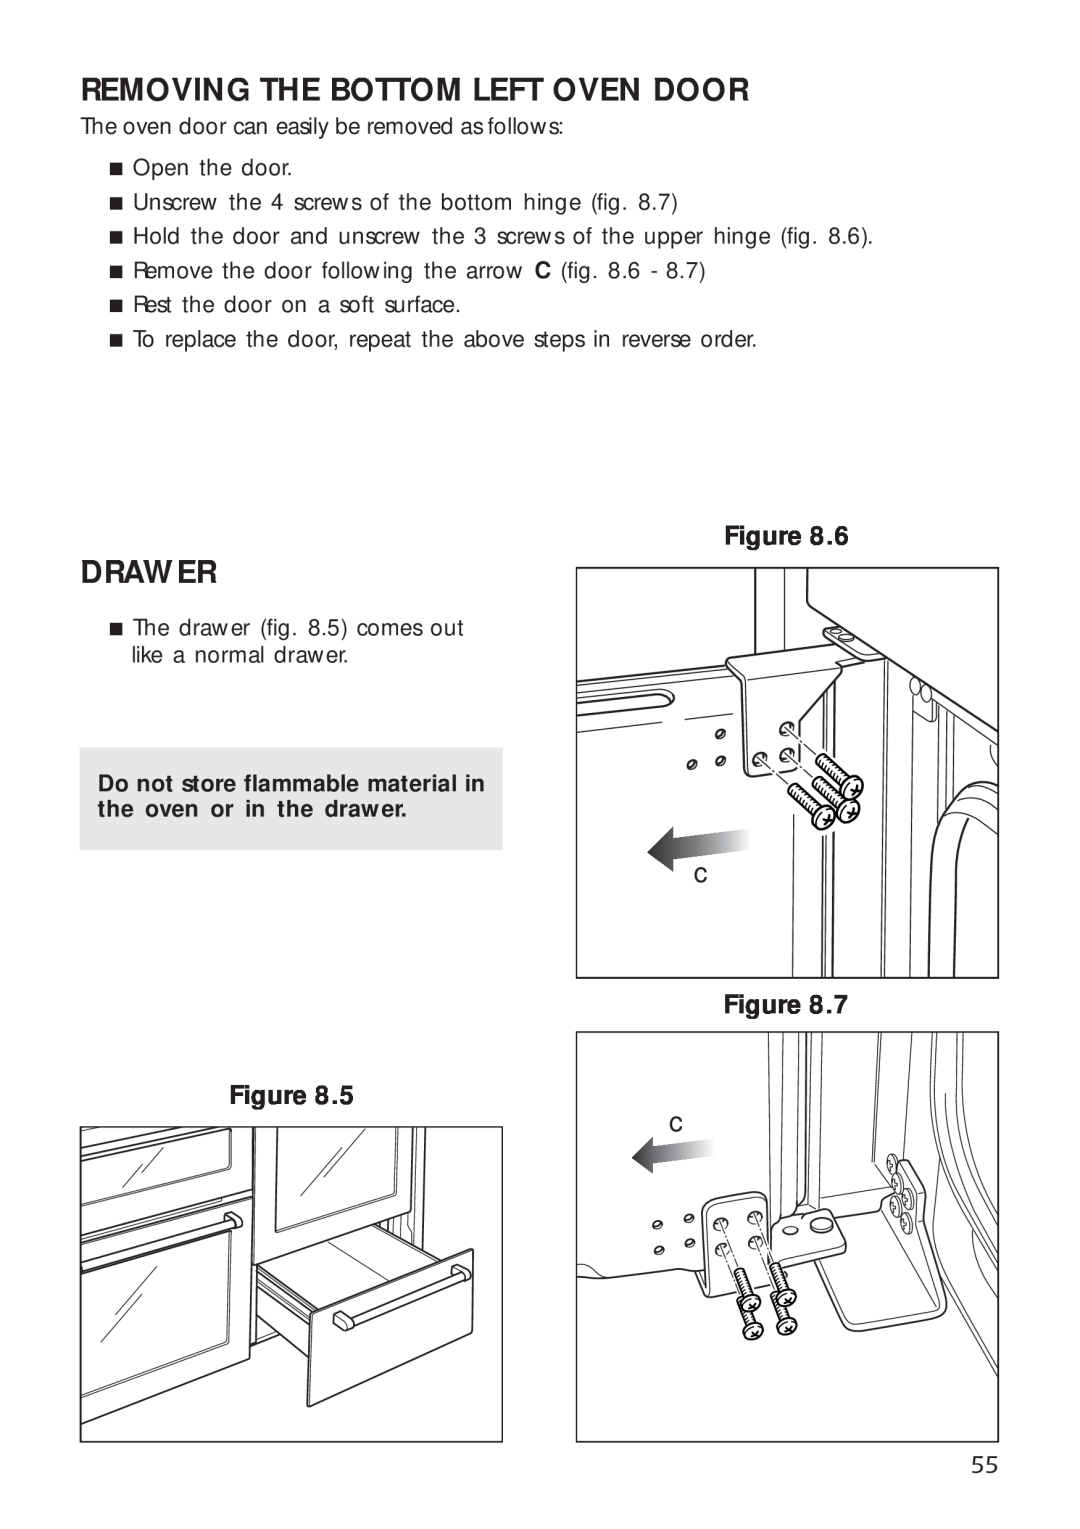 DeLonghi A 1346 G manual Removing The Bottom Left Oven Door, Drawer 